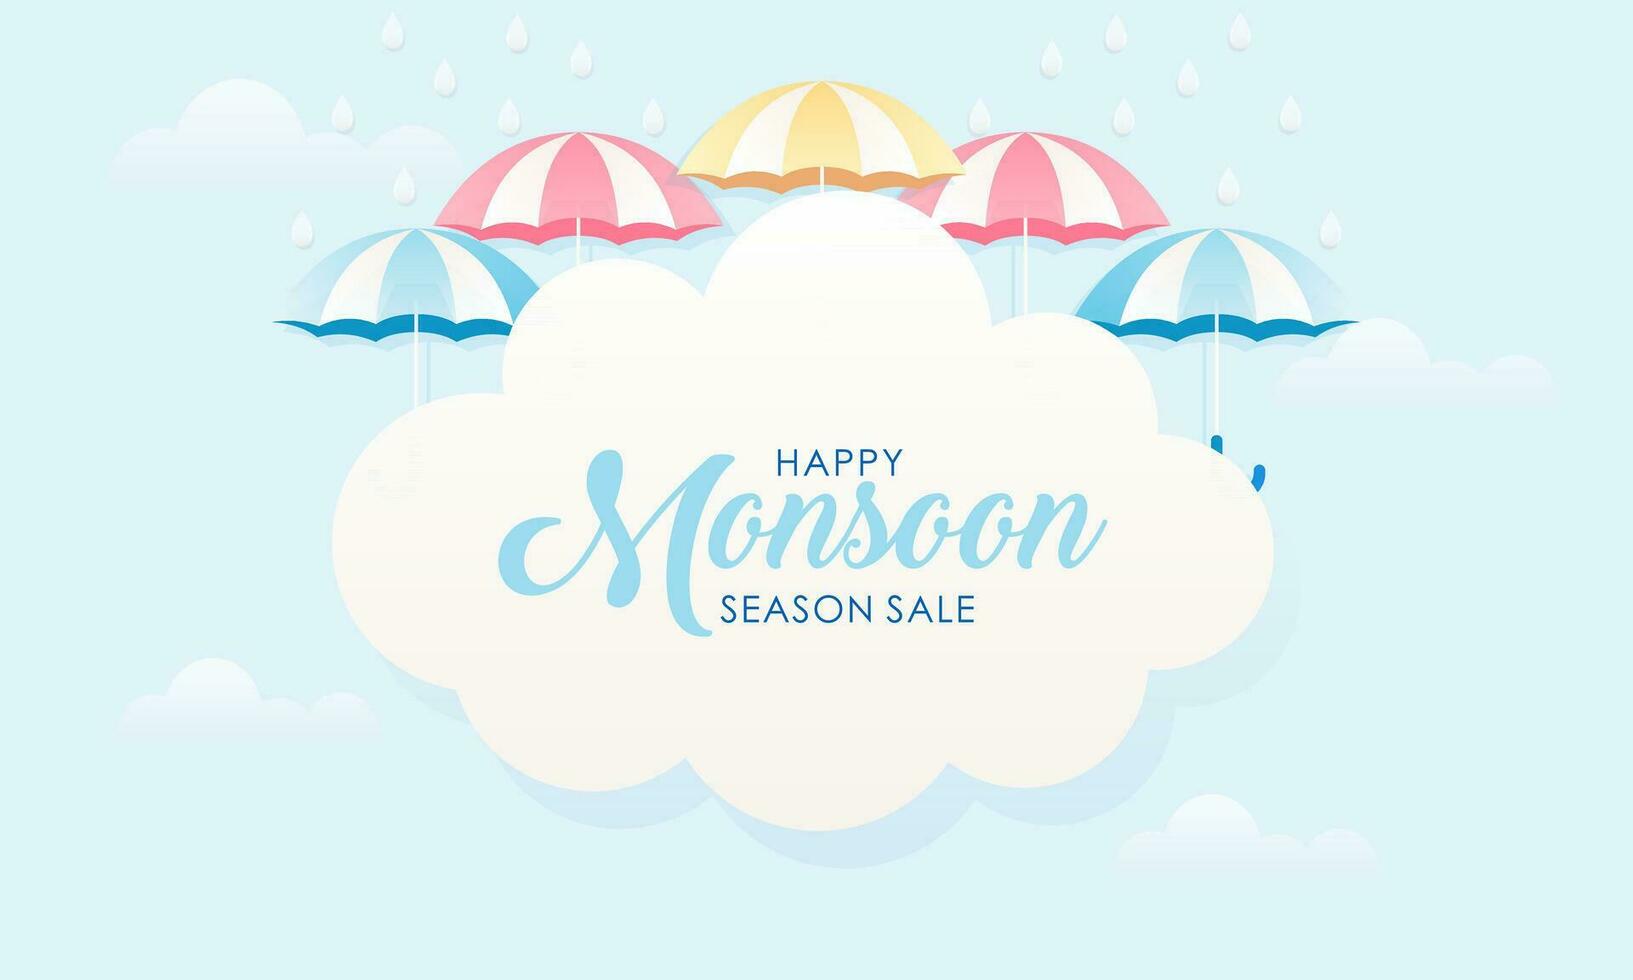 Cute Pastel Color Scheme and Paper Cut Style Happy Monsoon Season Sale Banner Background vector